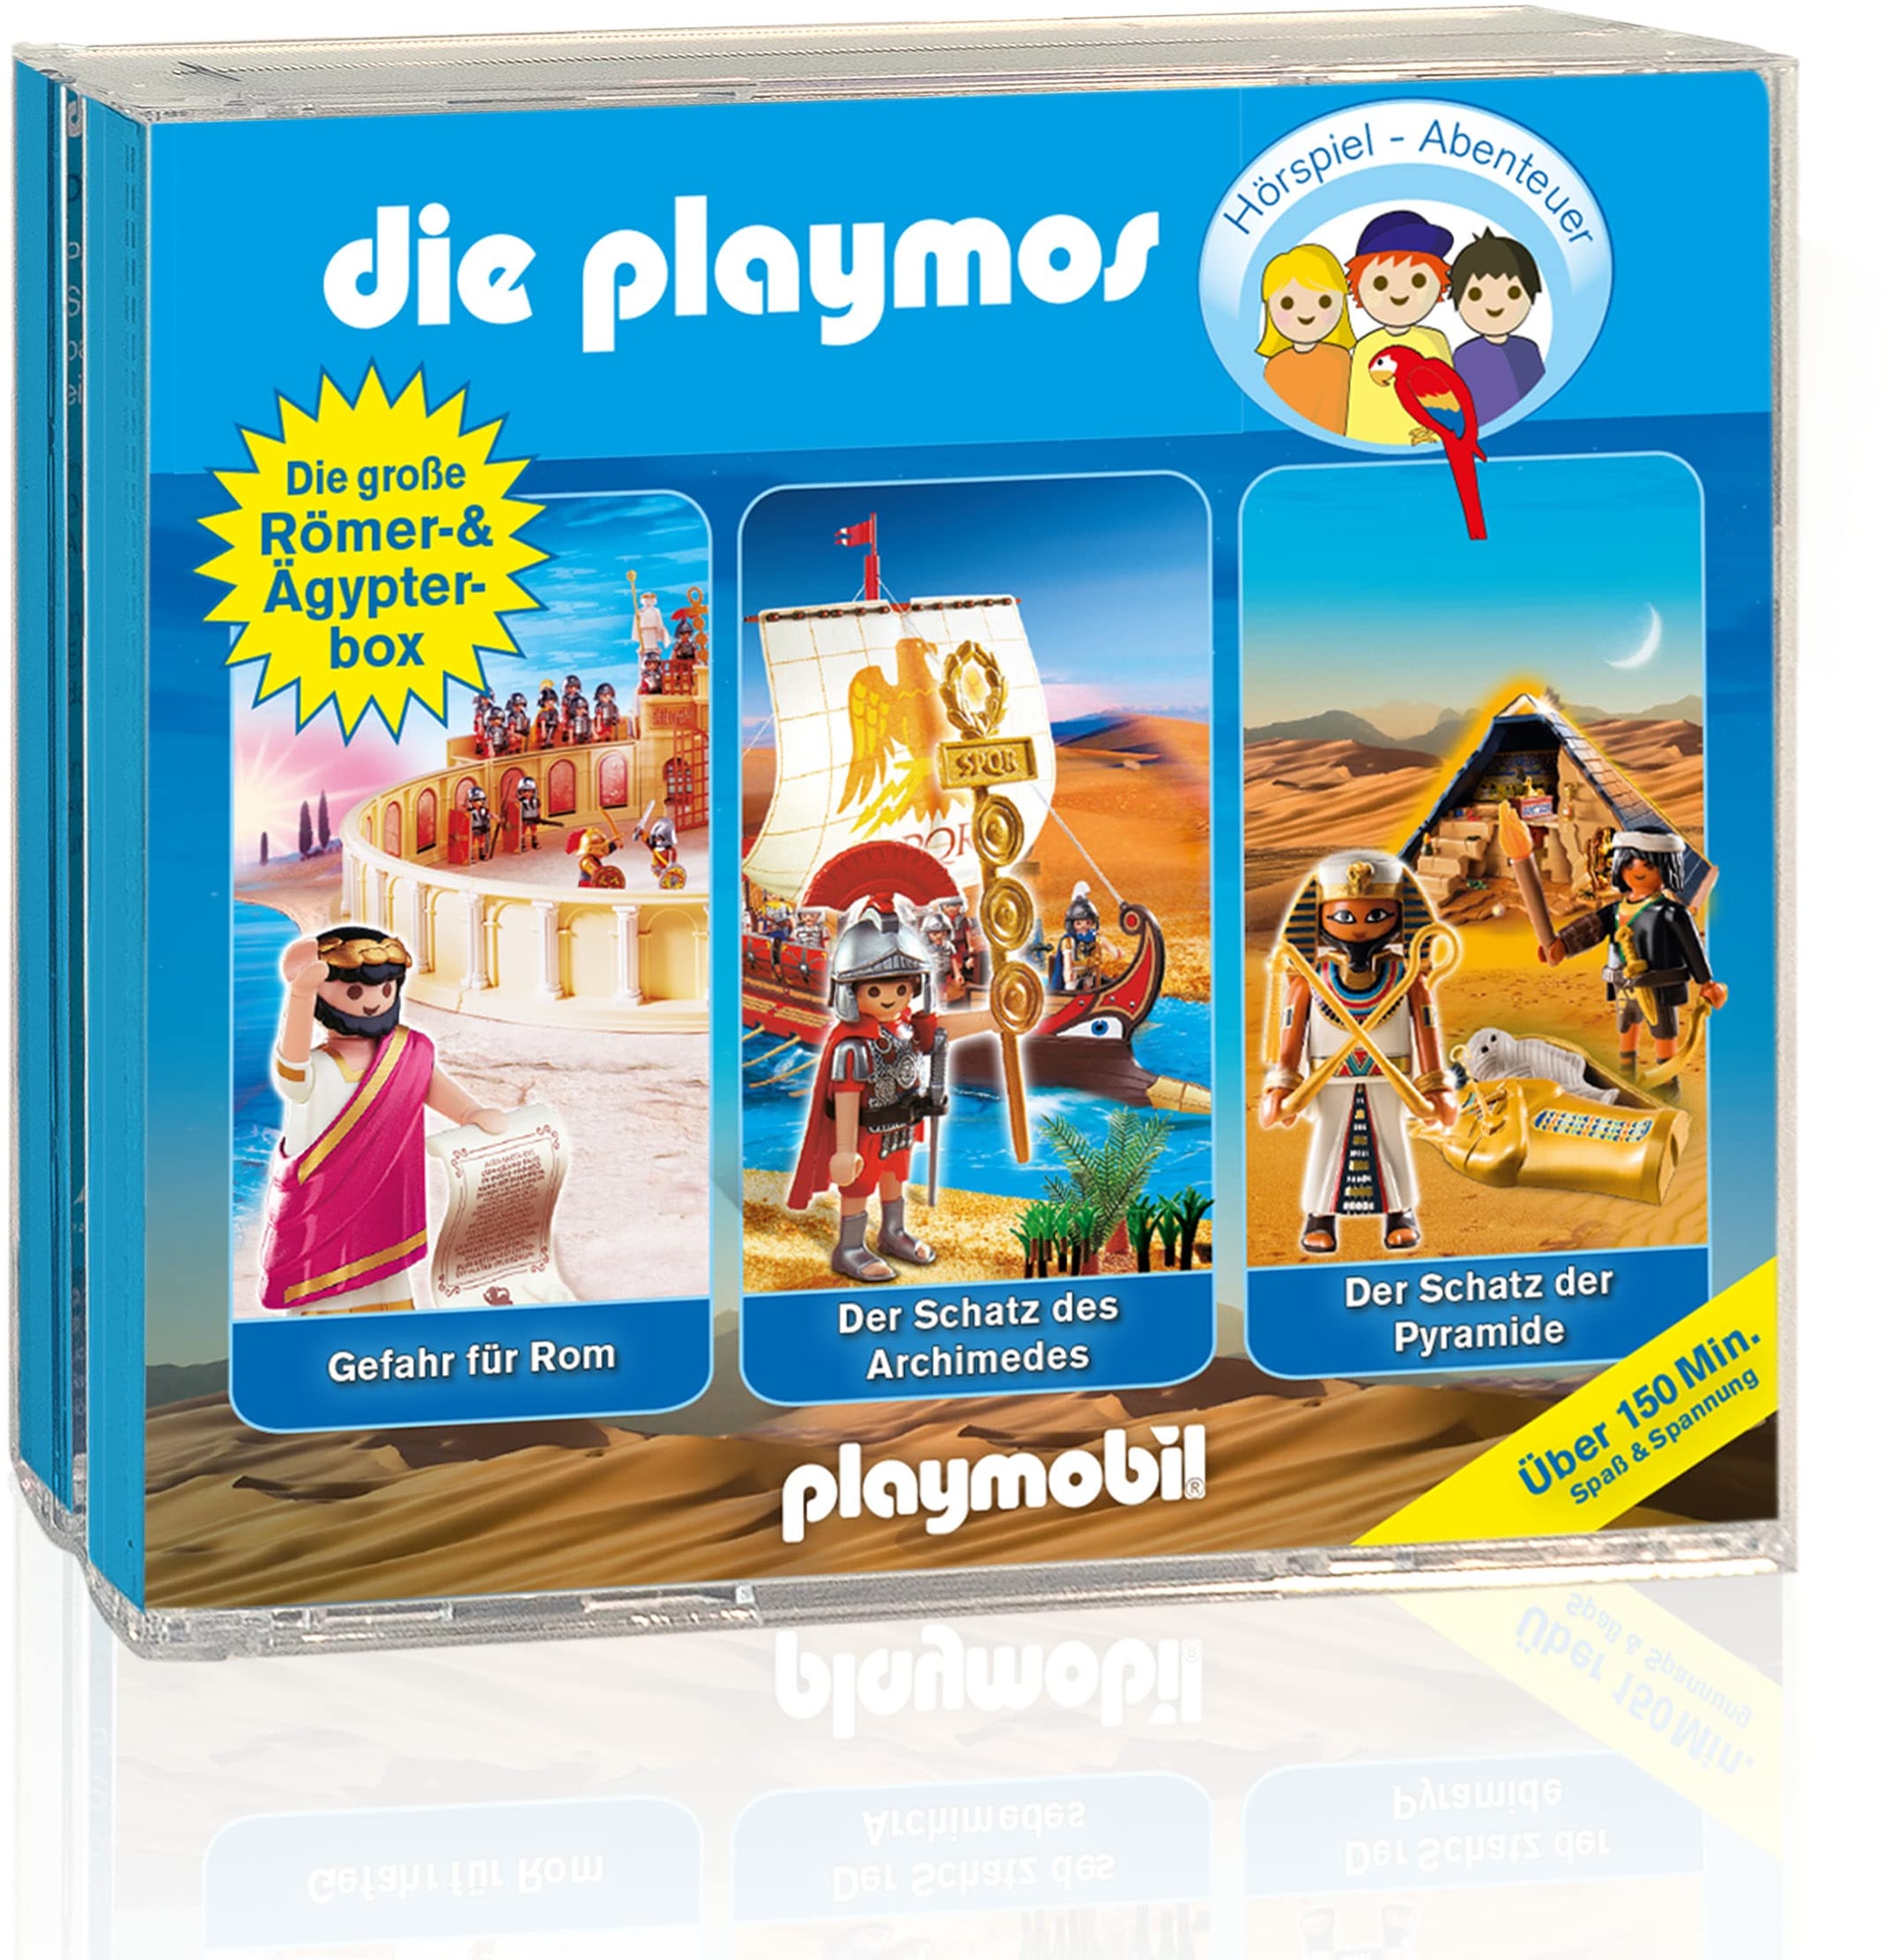 Die Playmos - Die große Römer- & Ägypterbox (Original Playmobil Hörspiele) (Neu differenzbesteuert)